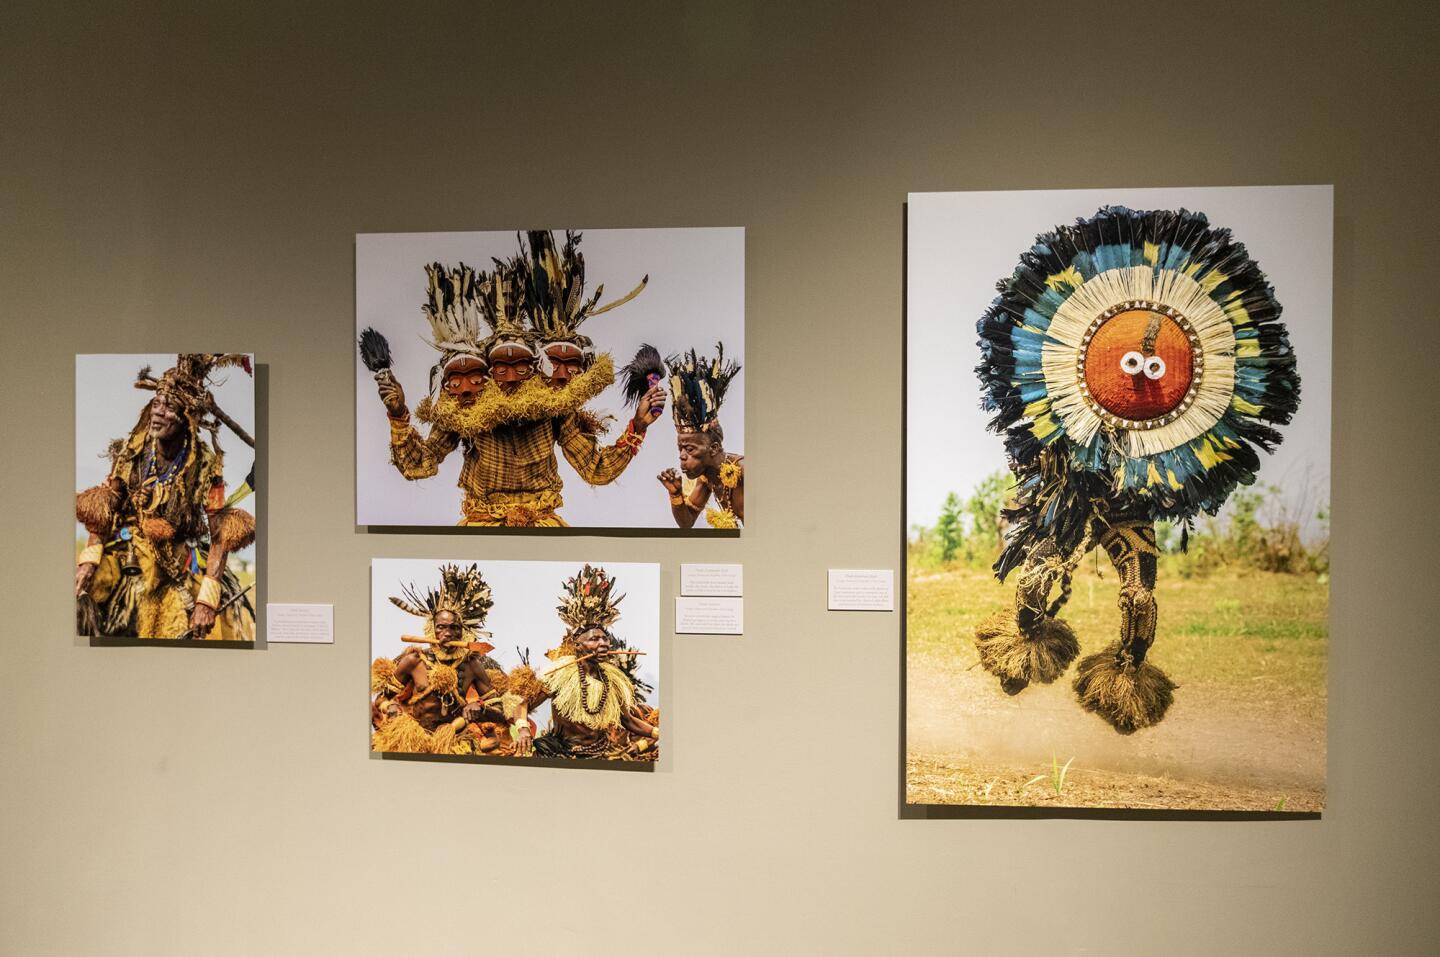 Photo Gallery: "African Twilight: Vanishing Rituals & Ceremonies" exhibit at the Bowers Museum